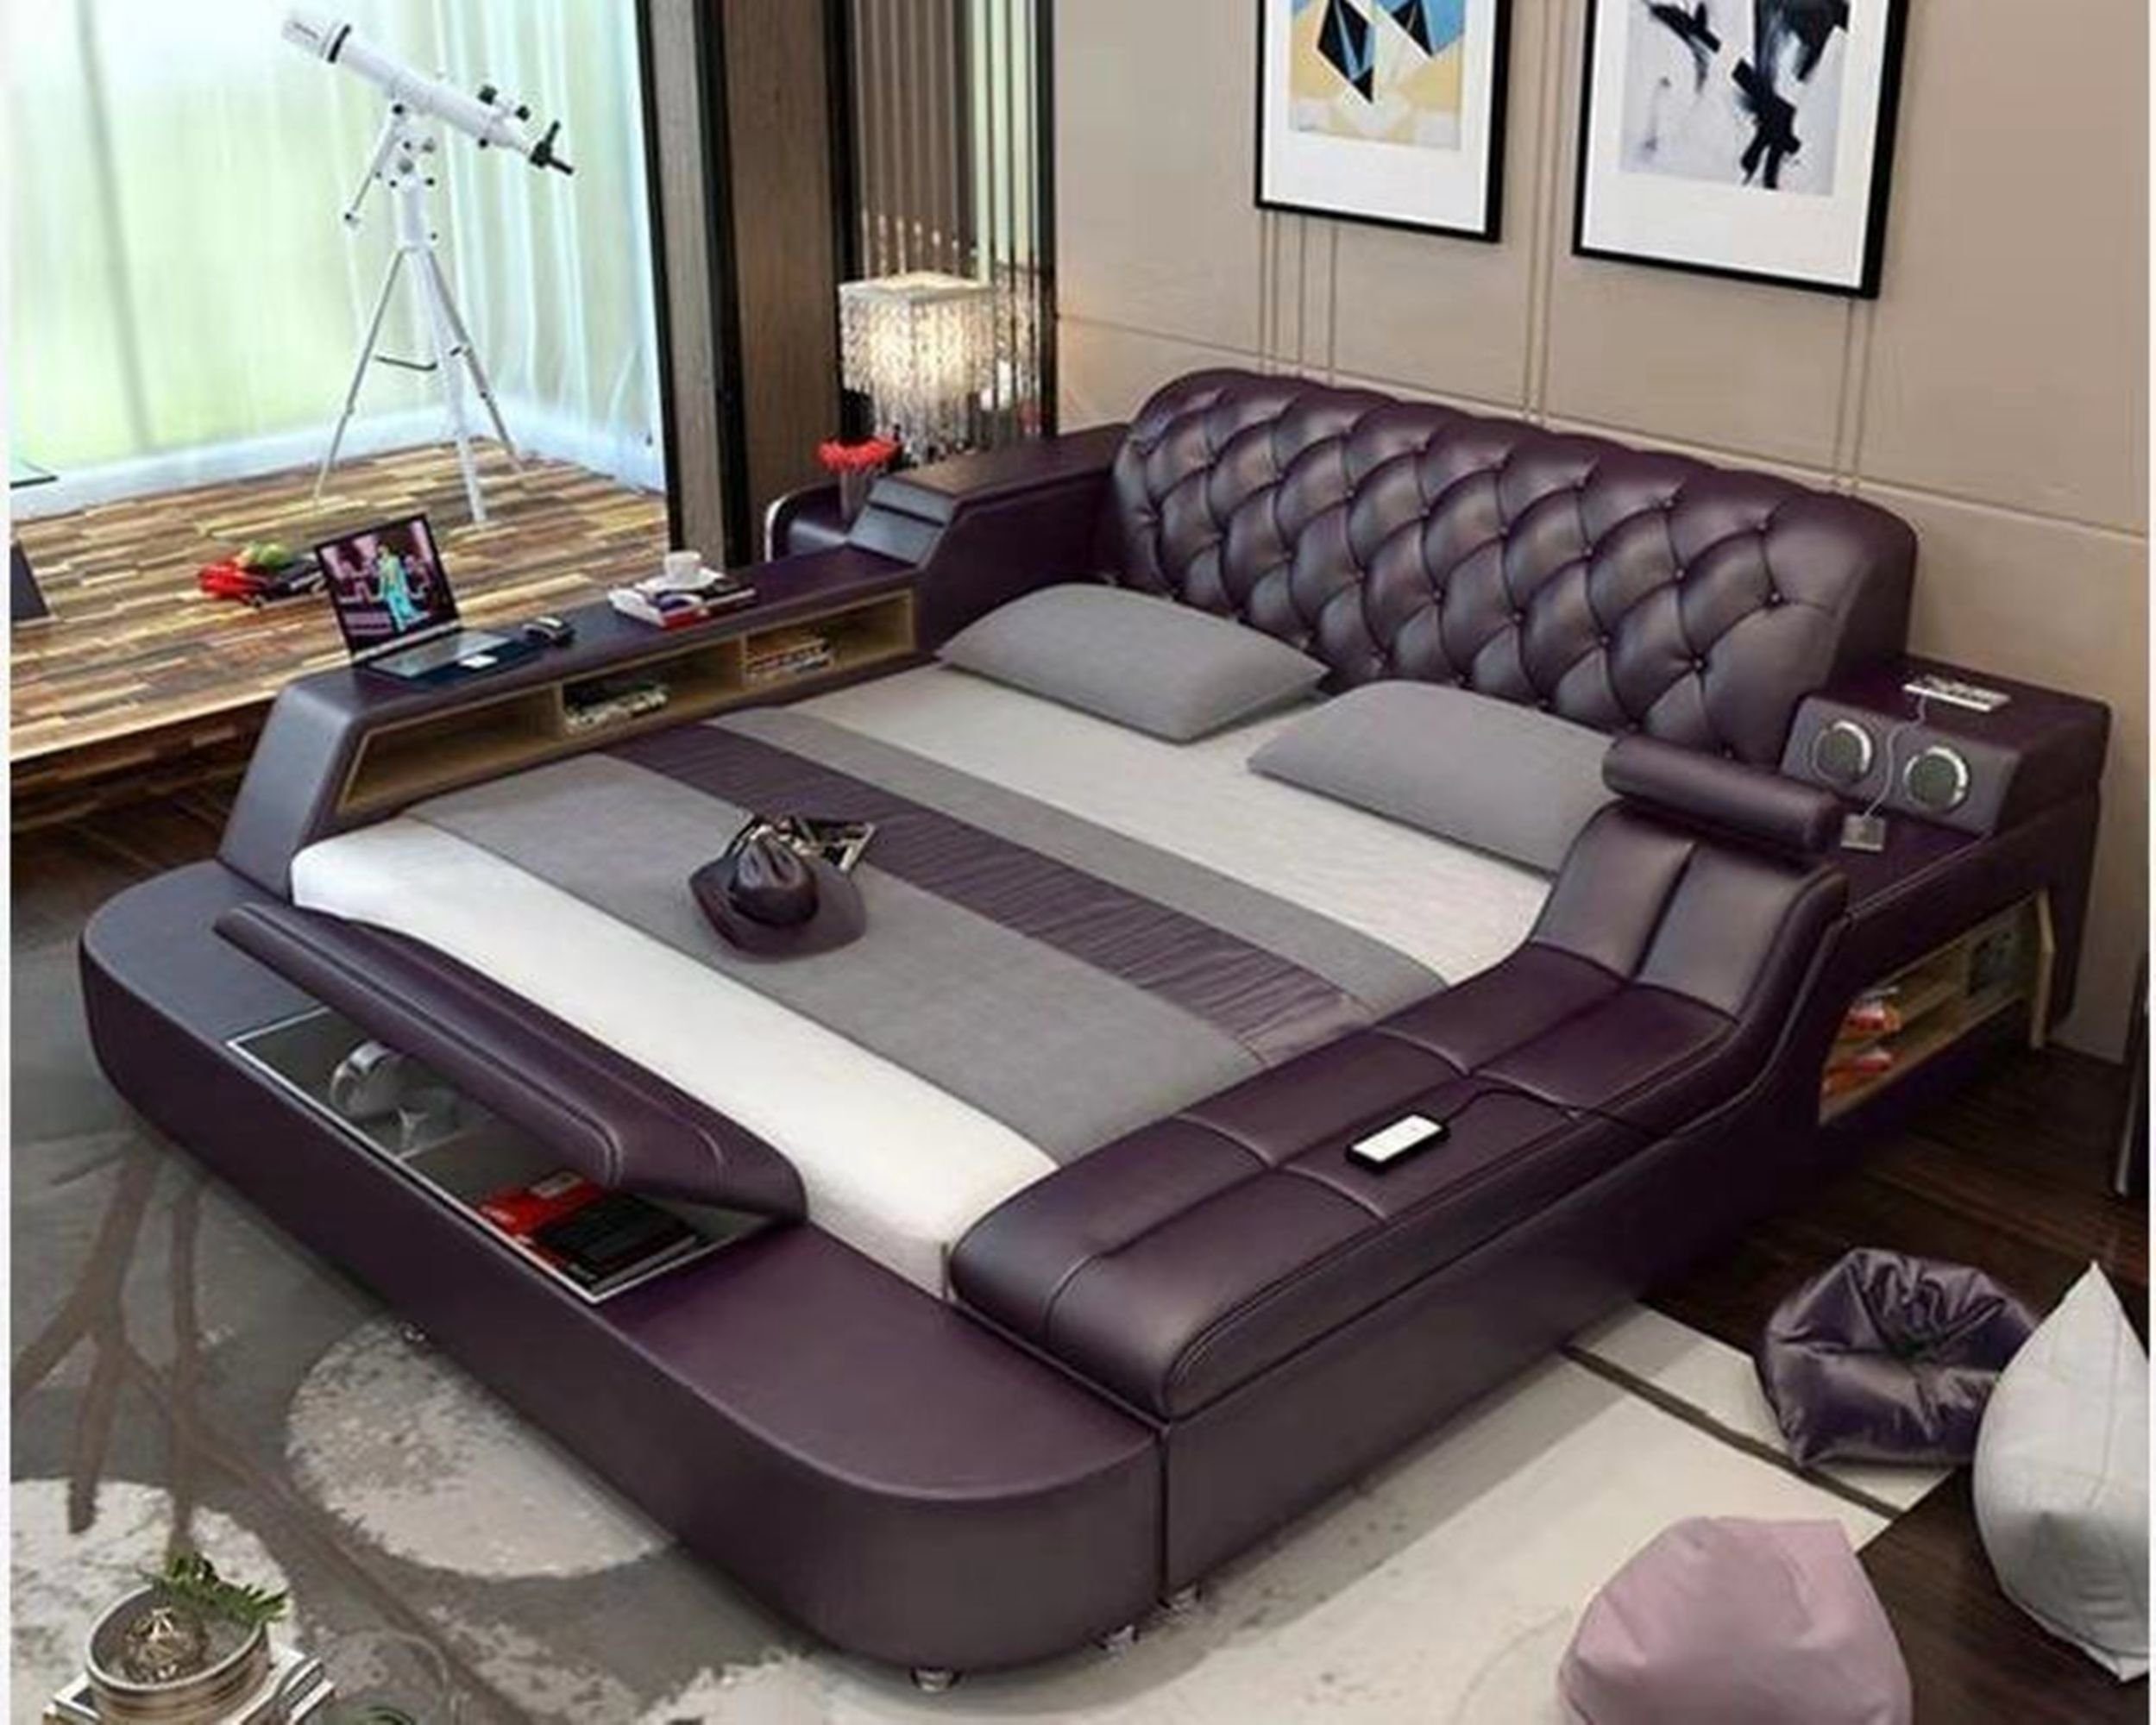 Polster XXL Betten Bett Design Multifunktion violett Leder JVmoebel Bett Hotel 150x200cm